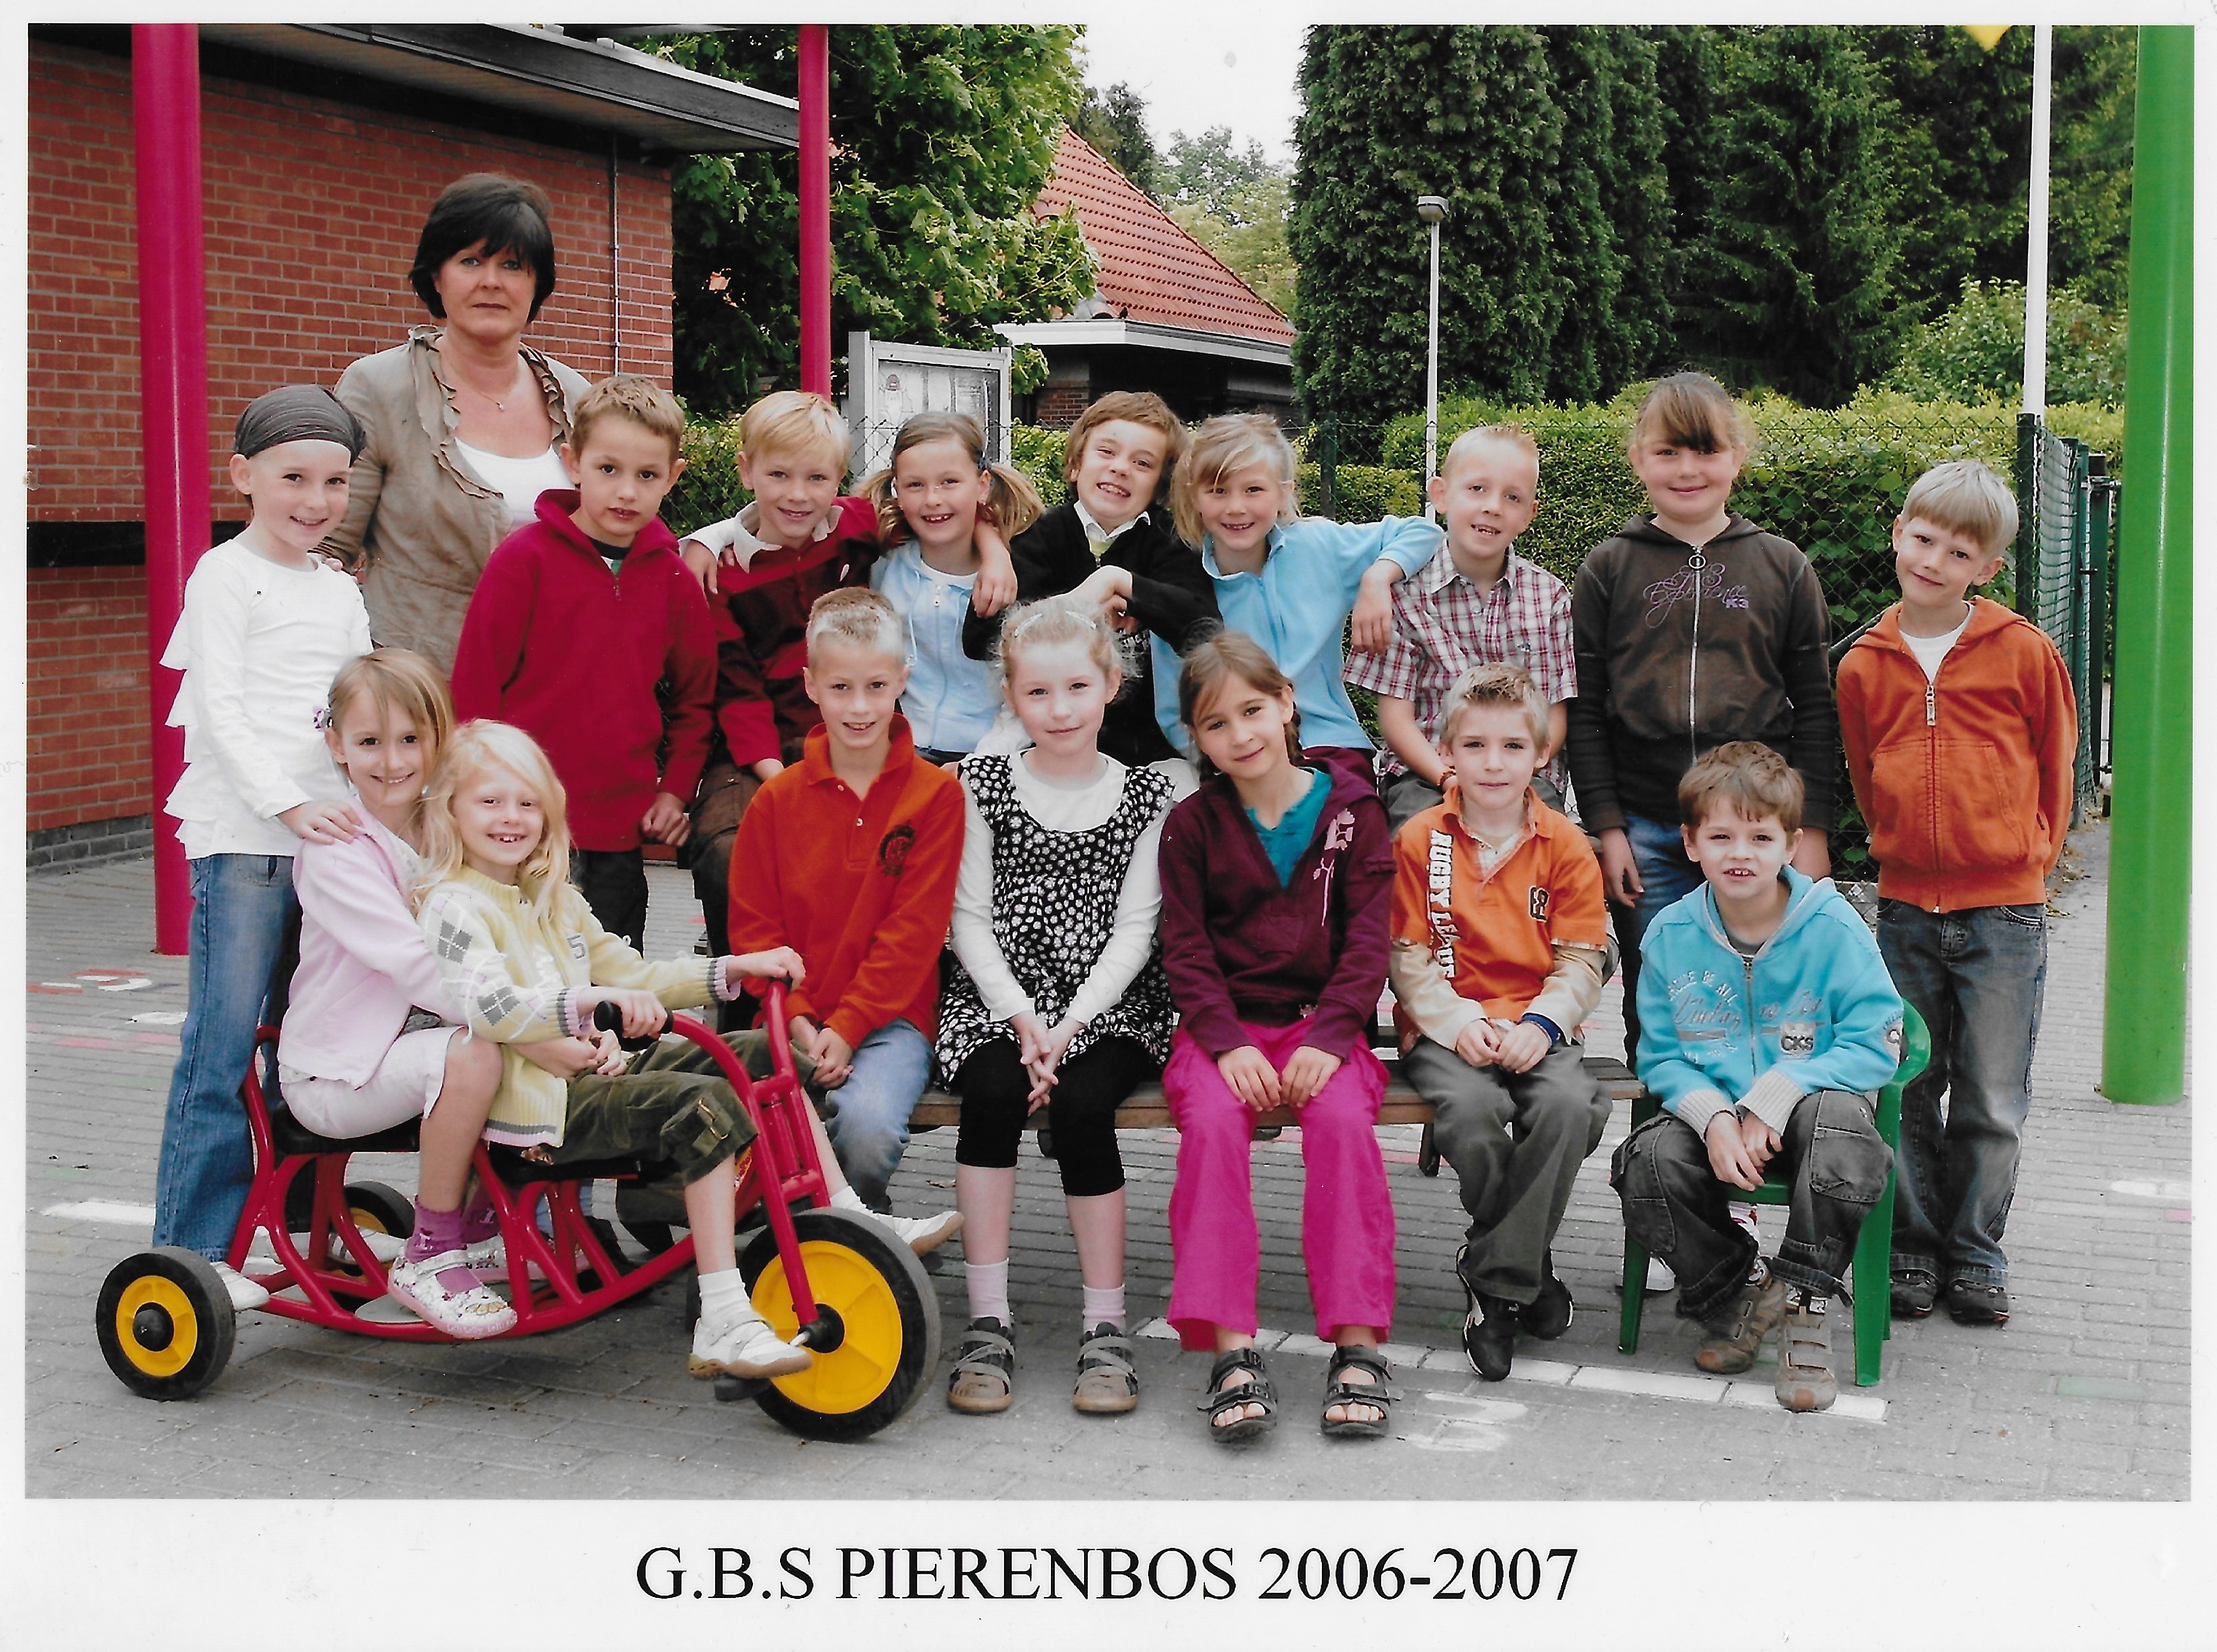 2006-2007 klasfoto 2e leerjaar A, Maria Aerts, Pierenbos Gemeenteschool Halle-Velden 2.jpeg